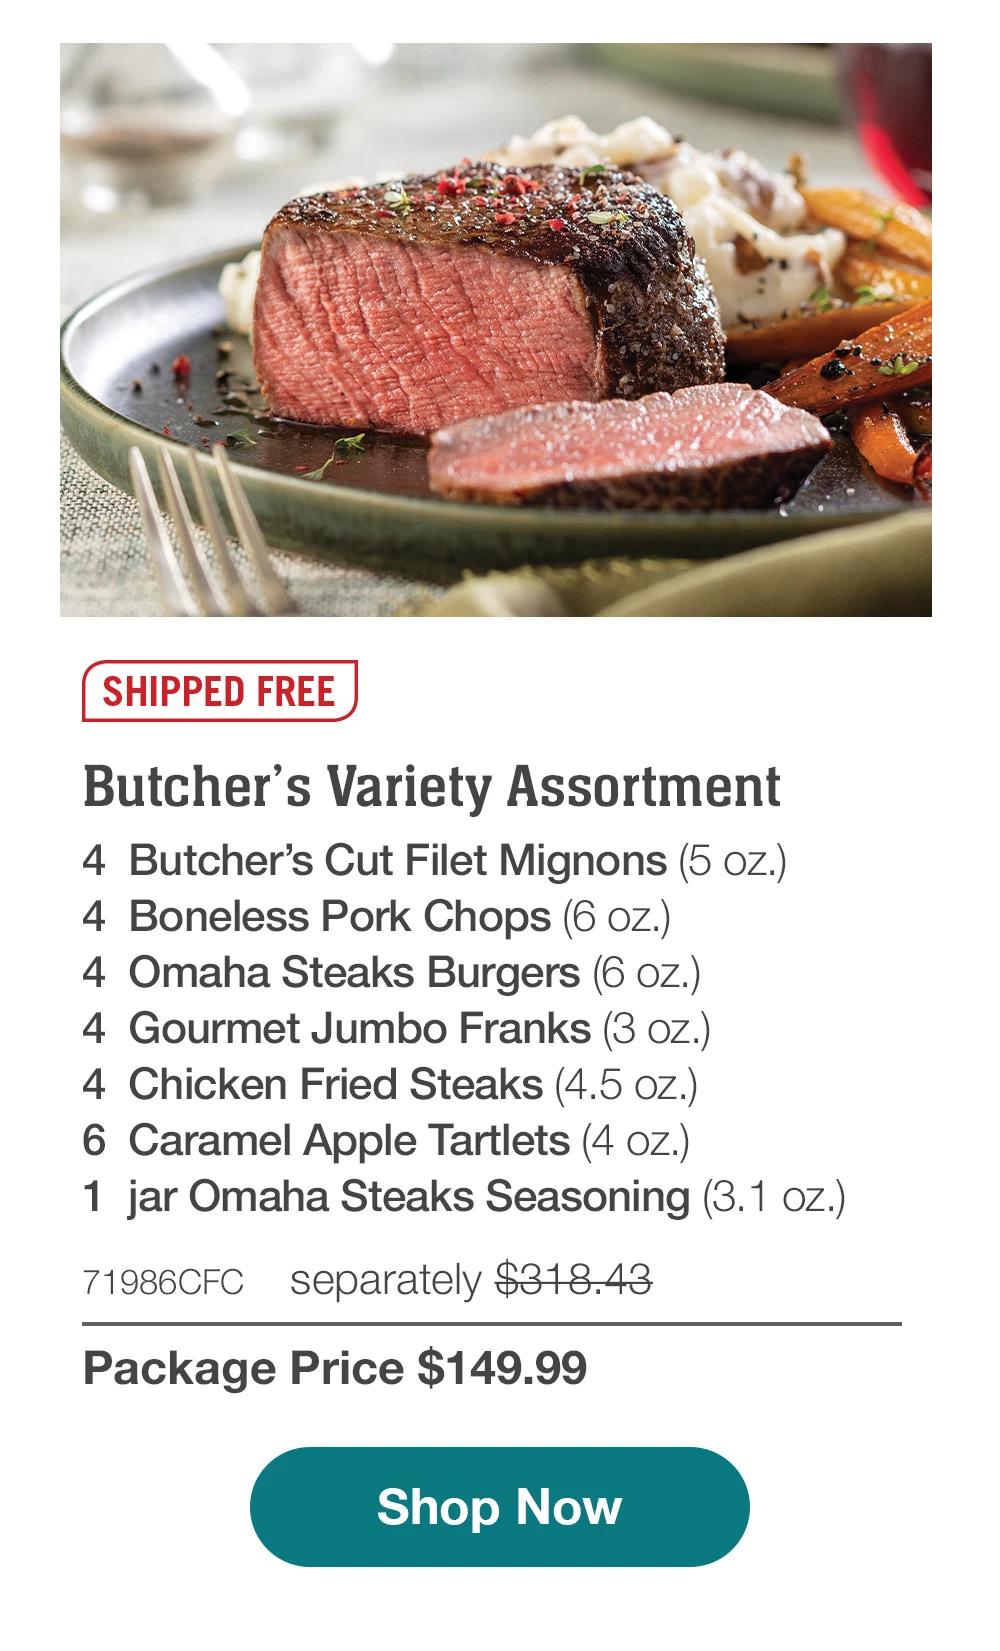 SHIPPED FREE | Butcher's Variety Assortment - 4  Butcher's Cut Filet Mignons (5 oz.) - 4  Boneless Pork Chops (6 oz.) - 4  Omaha Steaks Burgers (6 oz.) - 4  Gourmet Jumbo Franks (3 oz.) - 4  Chicken Fried Steaks (4.5 oz.) - 6  Caramel Apple Tartlets (4 oz.) - 1  jar Omaha Steaks Seasoning (3.1 oz.) - 71986CFC separately $318.43 | Package Price $149.99 || SHOP NOW